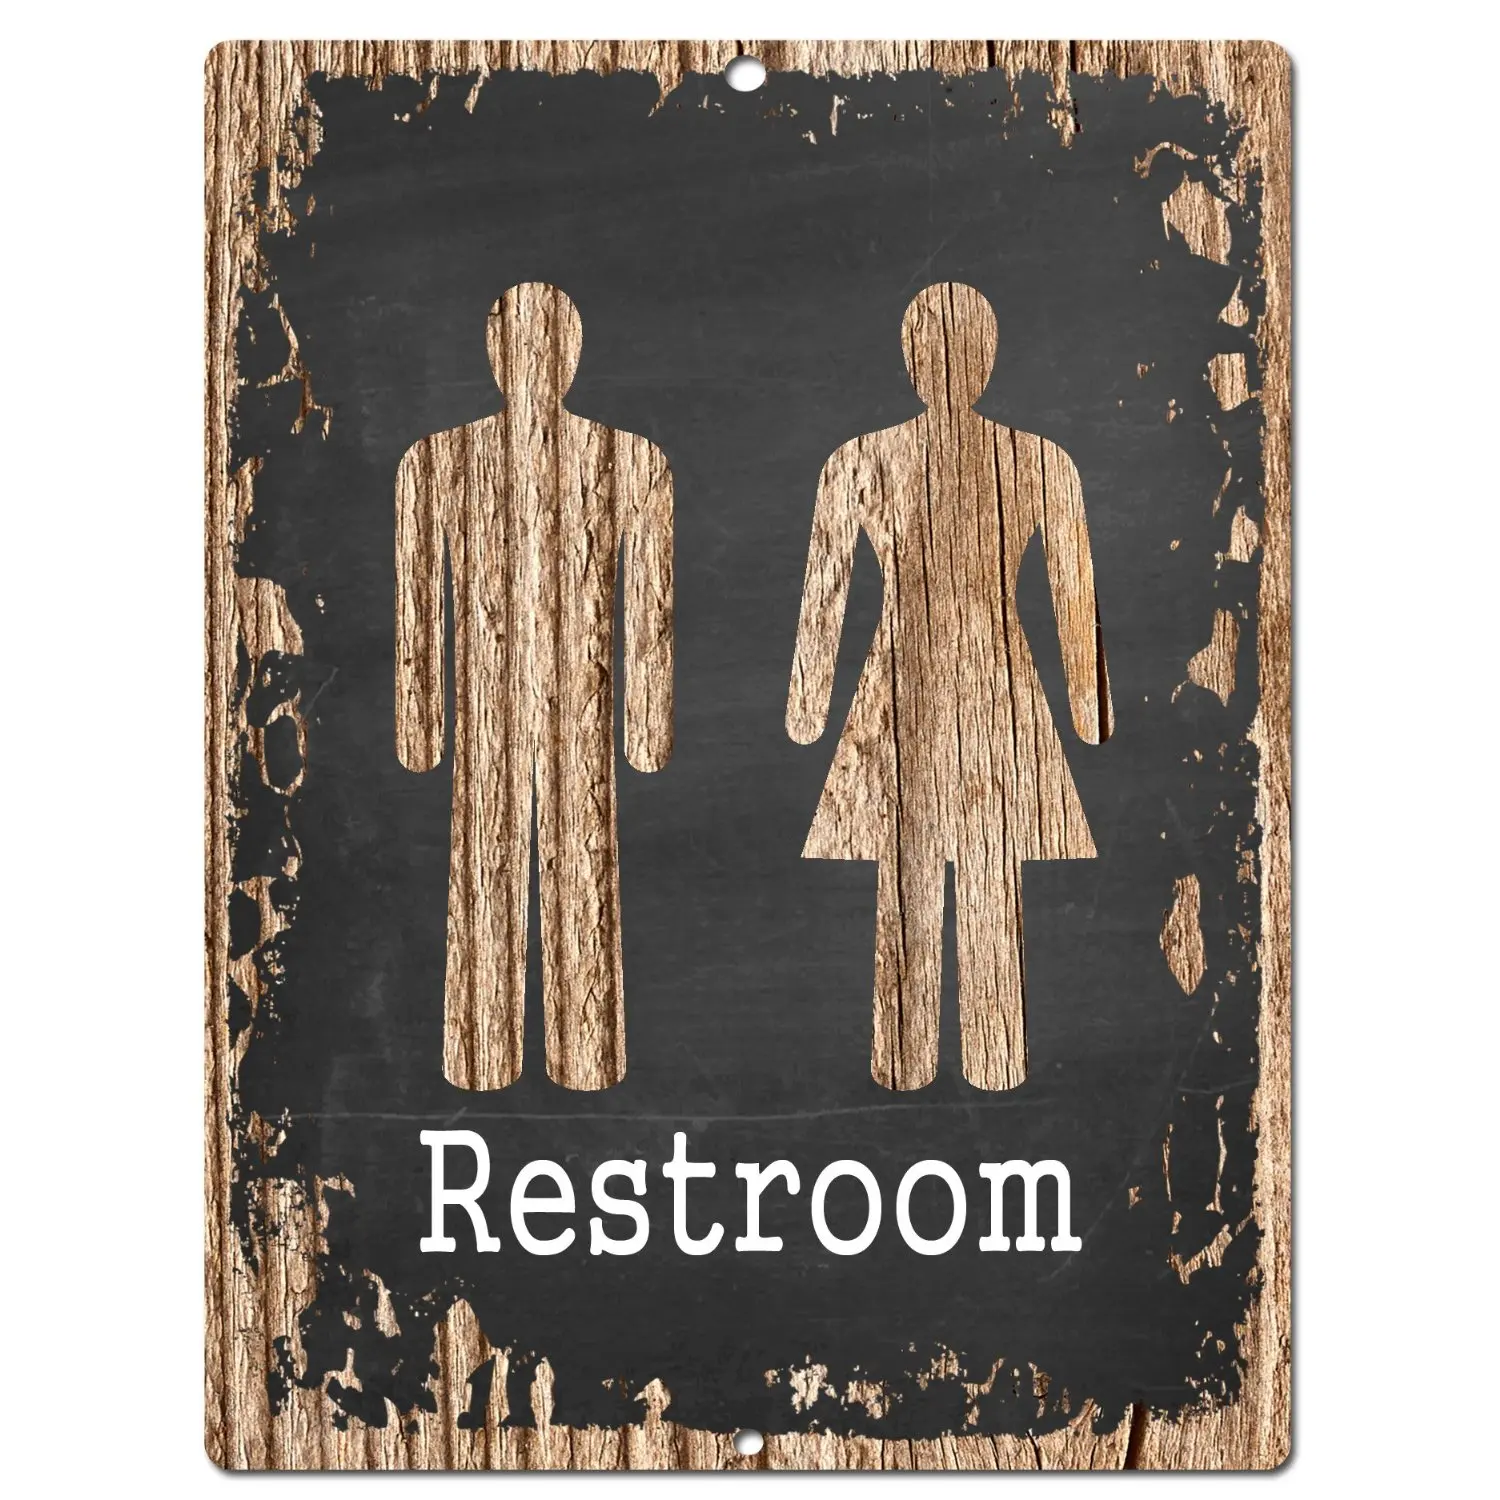 Restroom Chic Sign Rustic Vintage Chalkboard style Retro Kitchen Bar Pub Co...